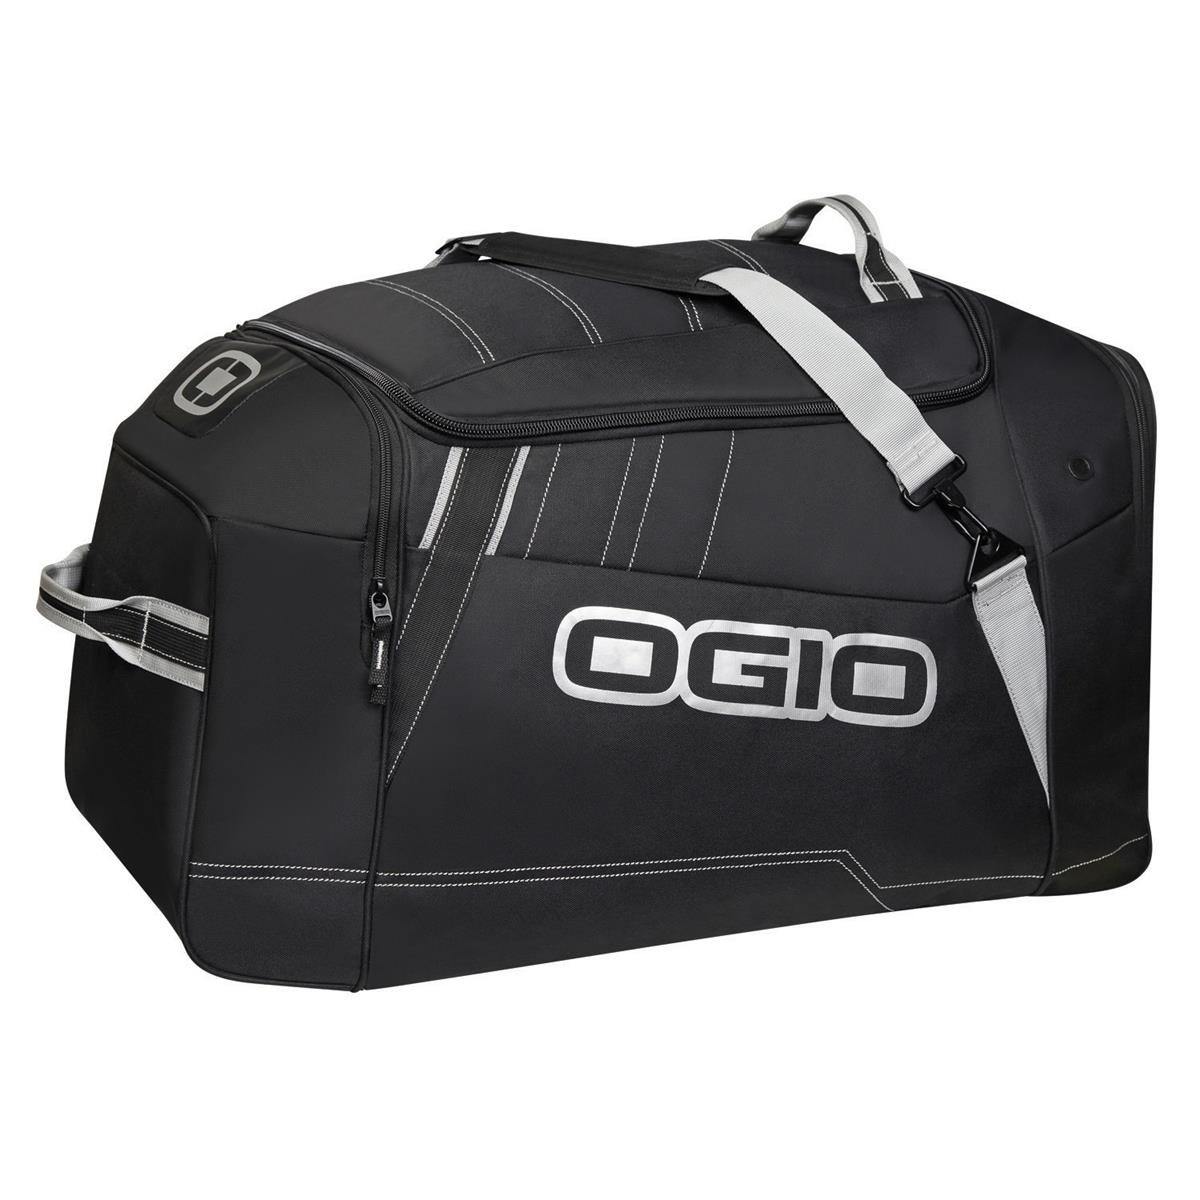 Ogio Travel Bag Slayer Stealth, 125 Liter